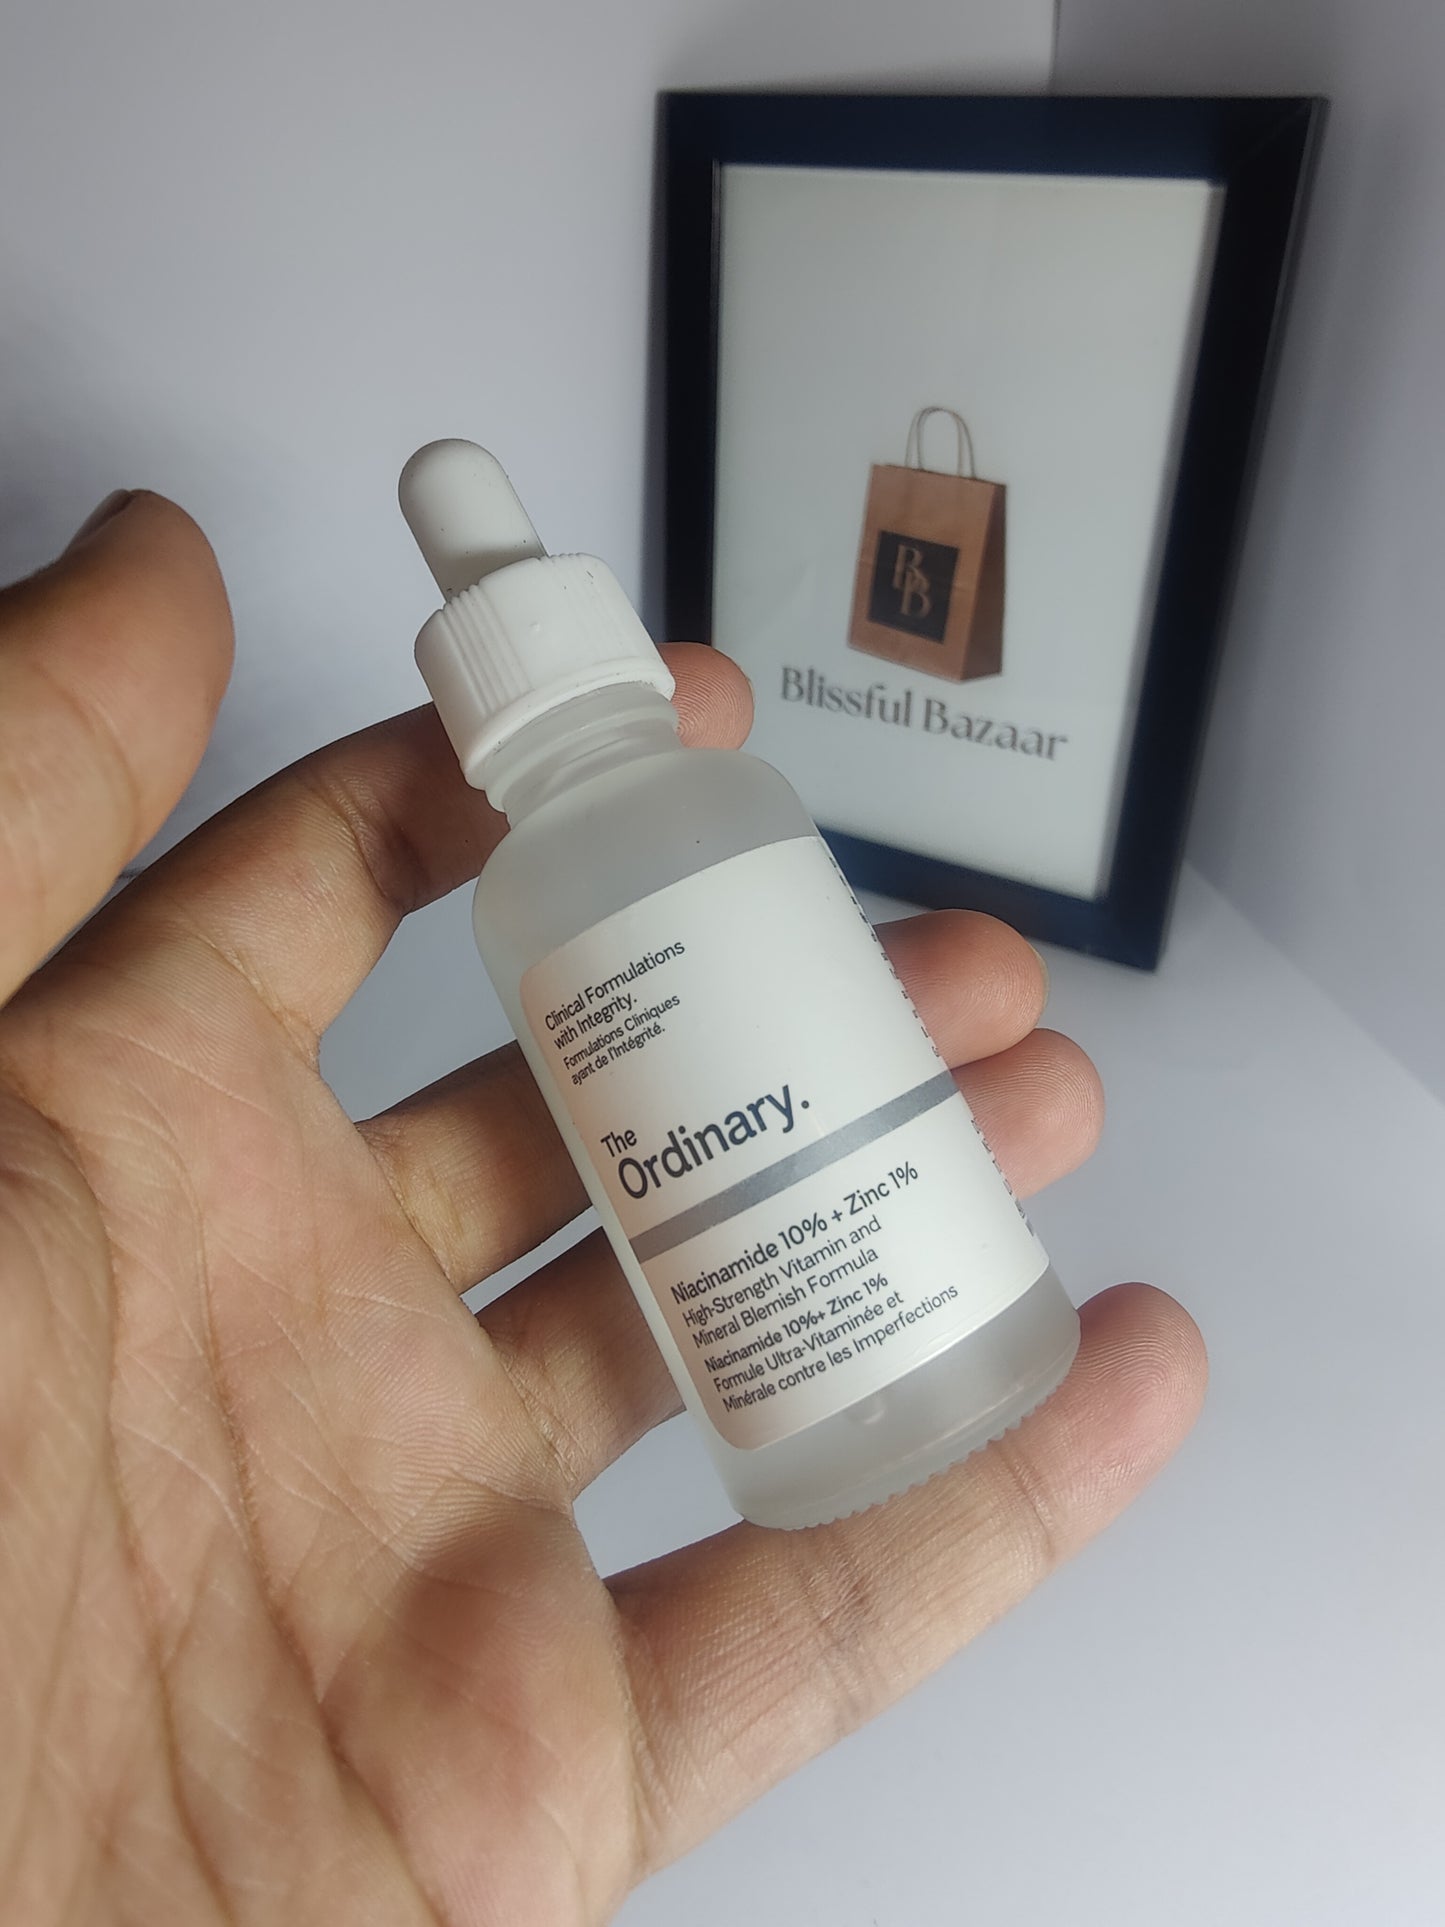 Niacinamide 10% + Zinc 1% Skin (Ordinary Serum Original)